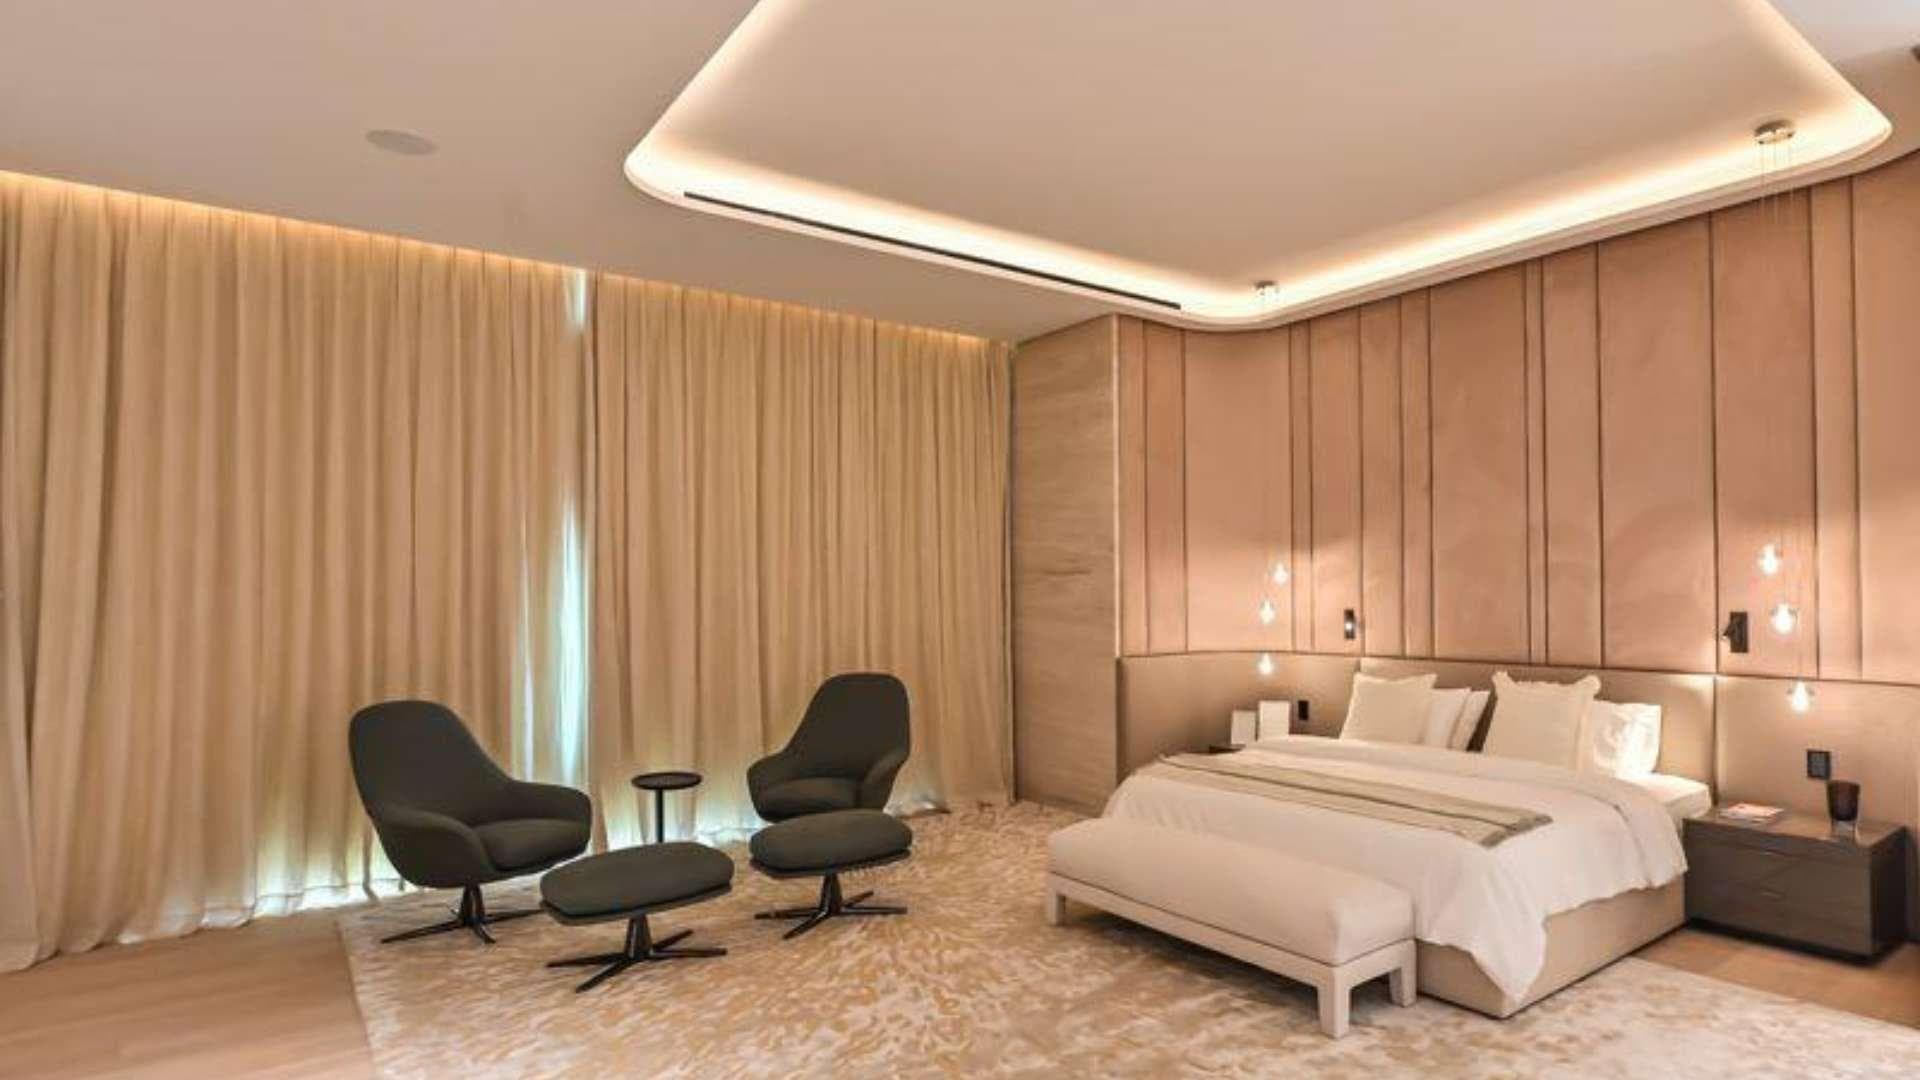 7 Bedroom Villa For Sale Dubai Hills Lp20693 C876e085a48a700.jpg